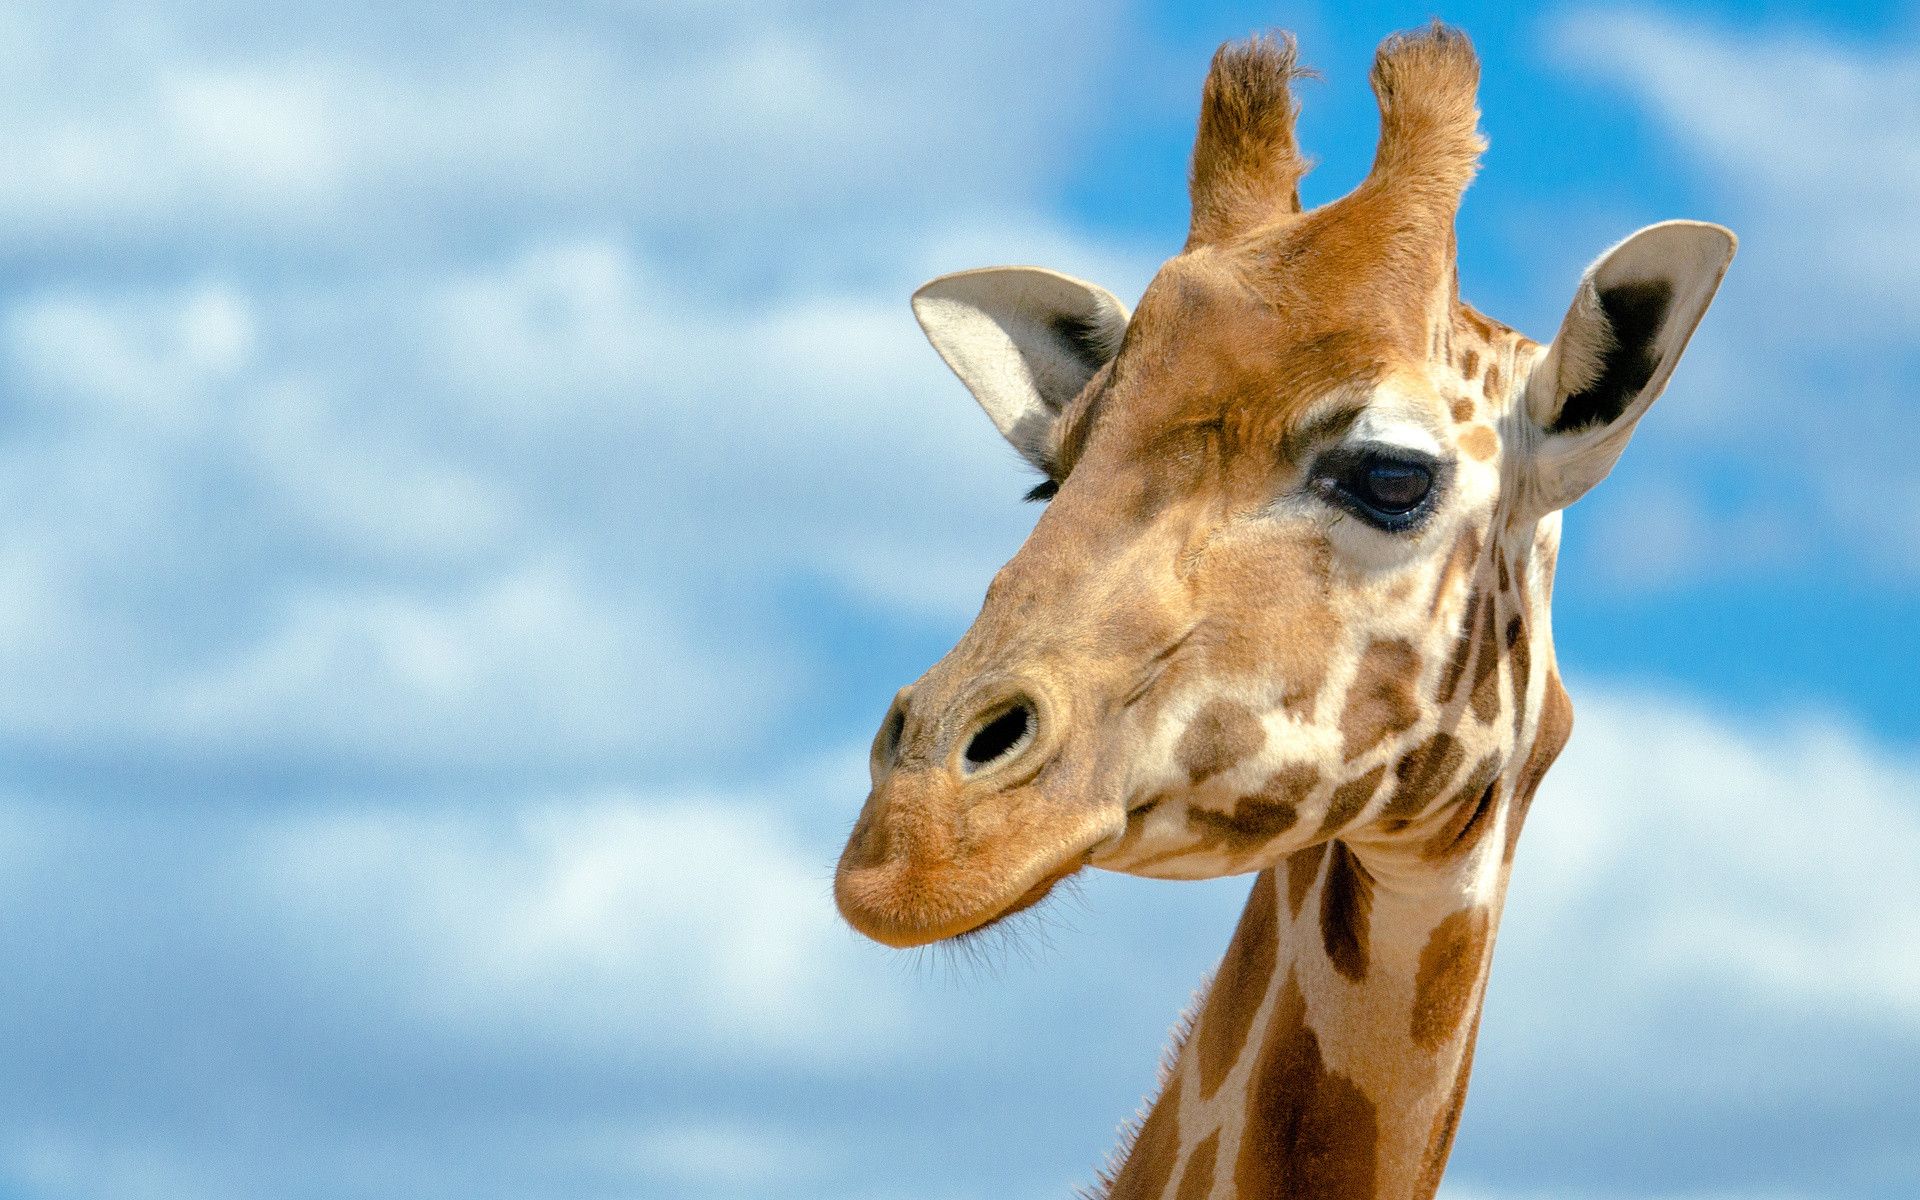 Giraffe HD Wallpaper Animal Pictures Cool